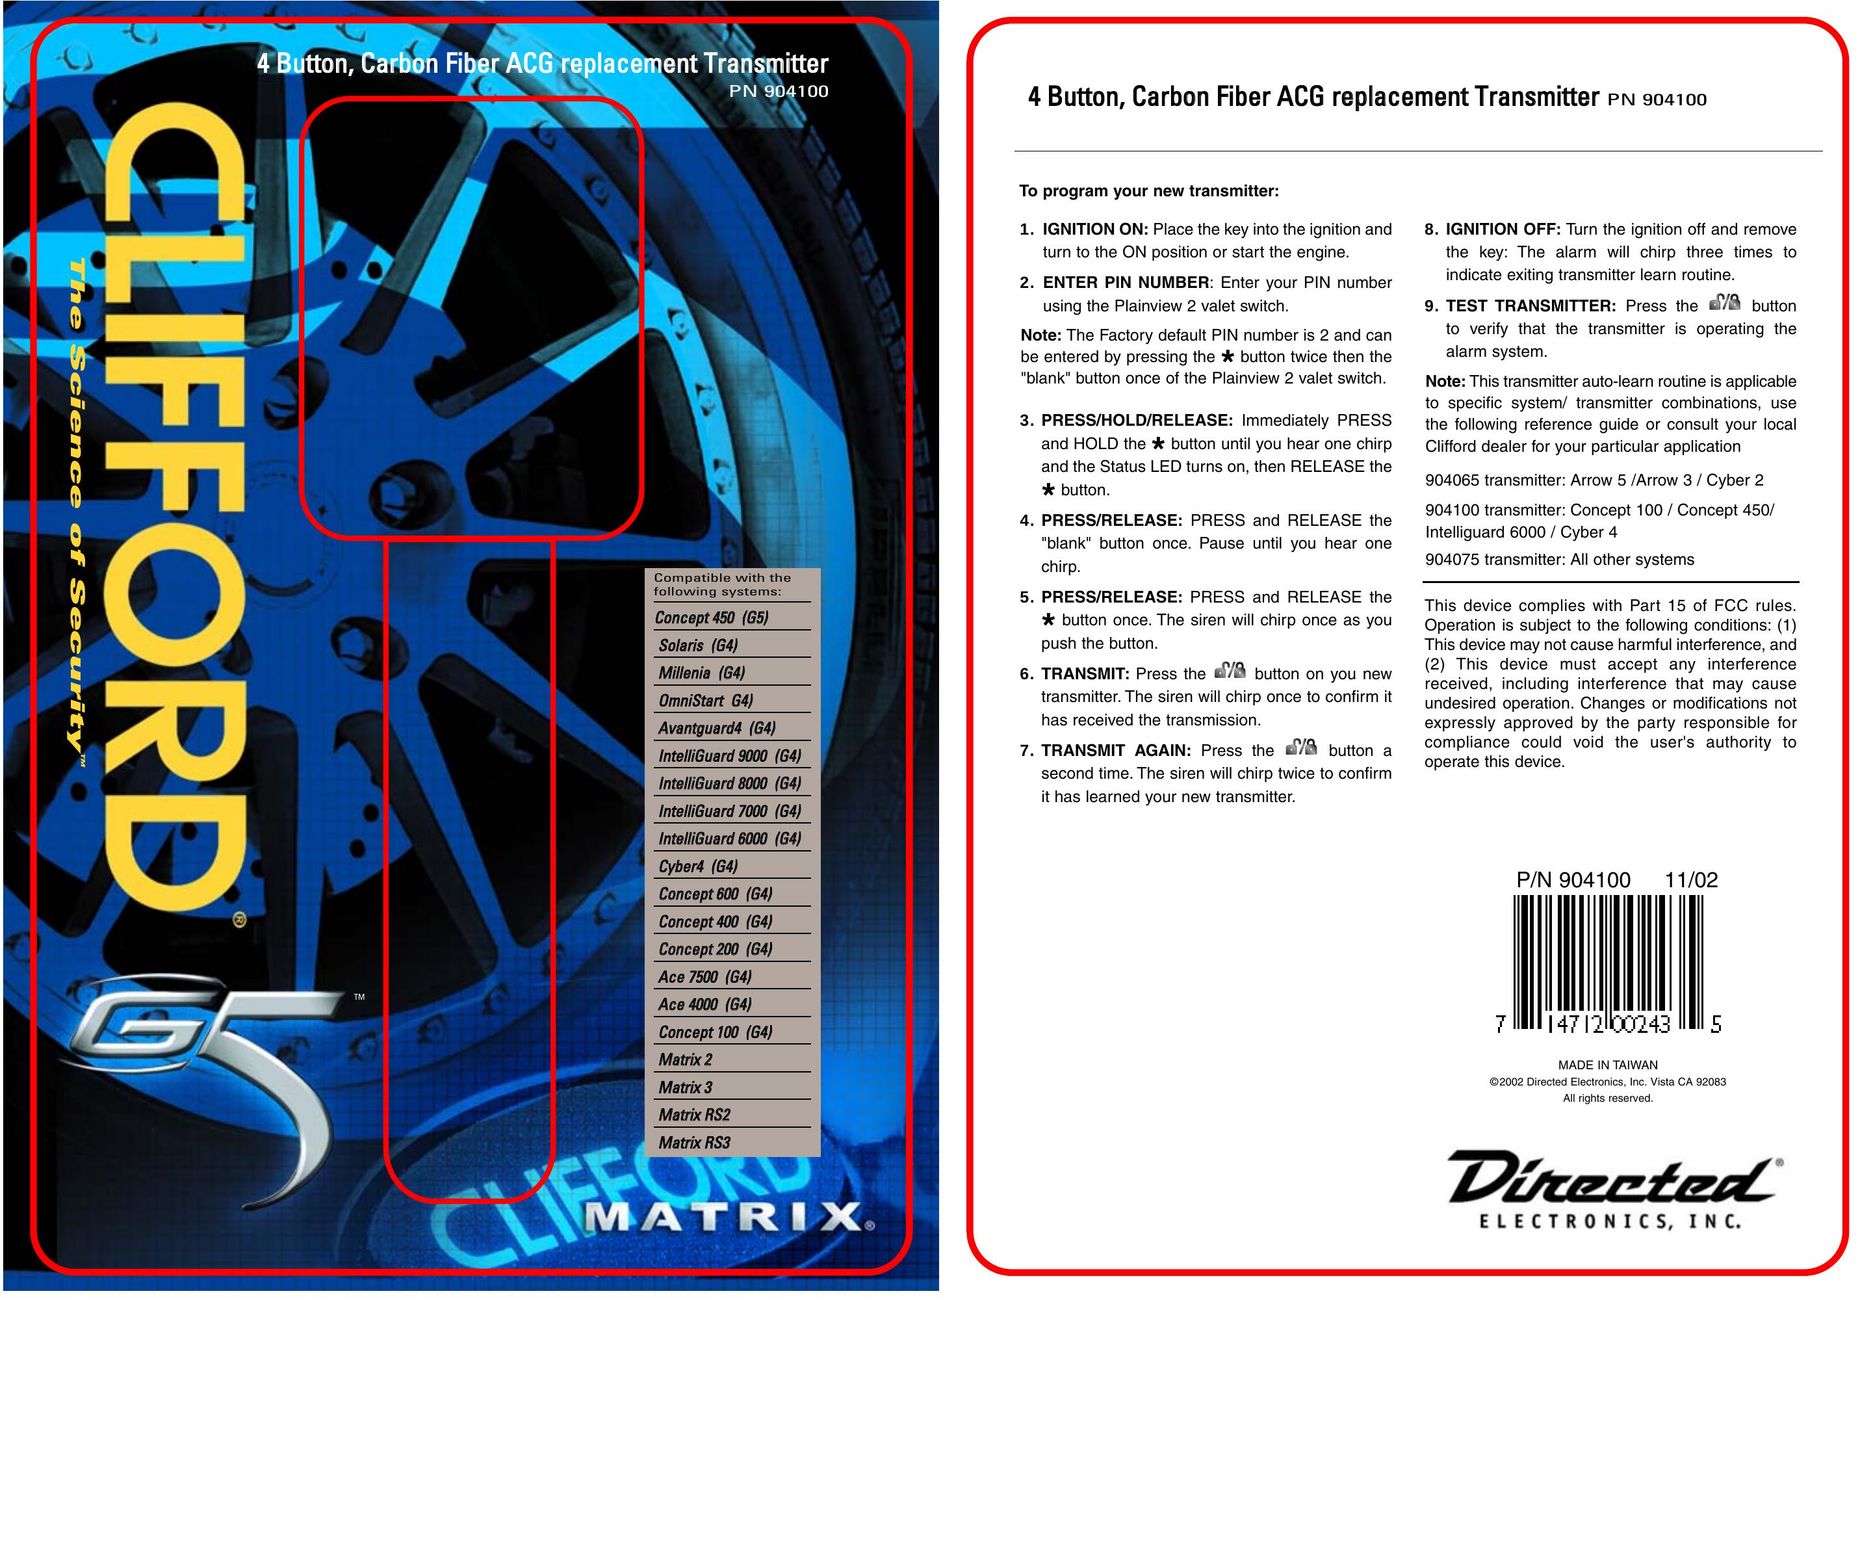 Directed Electronics PN 904100 Window User Manual